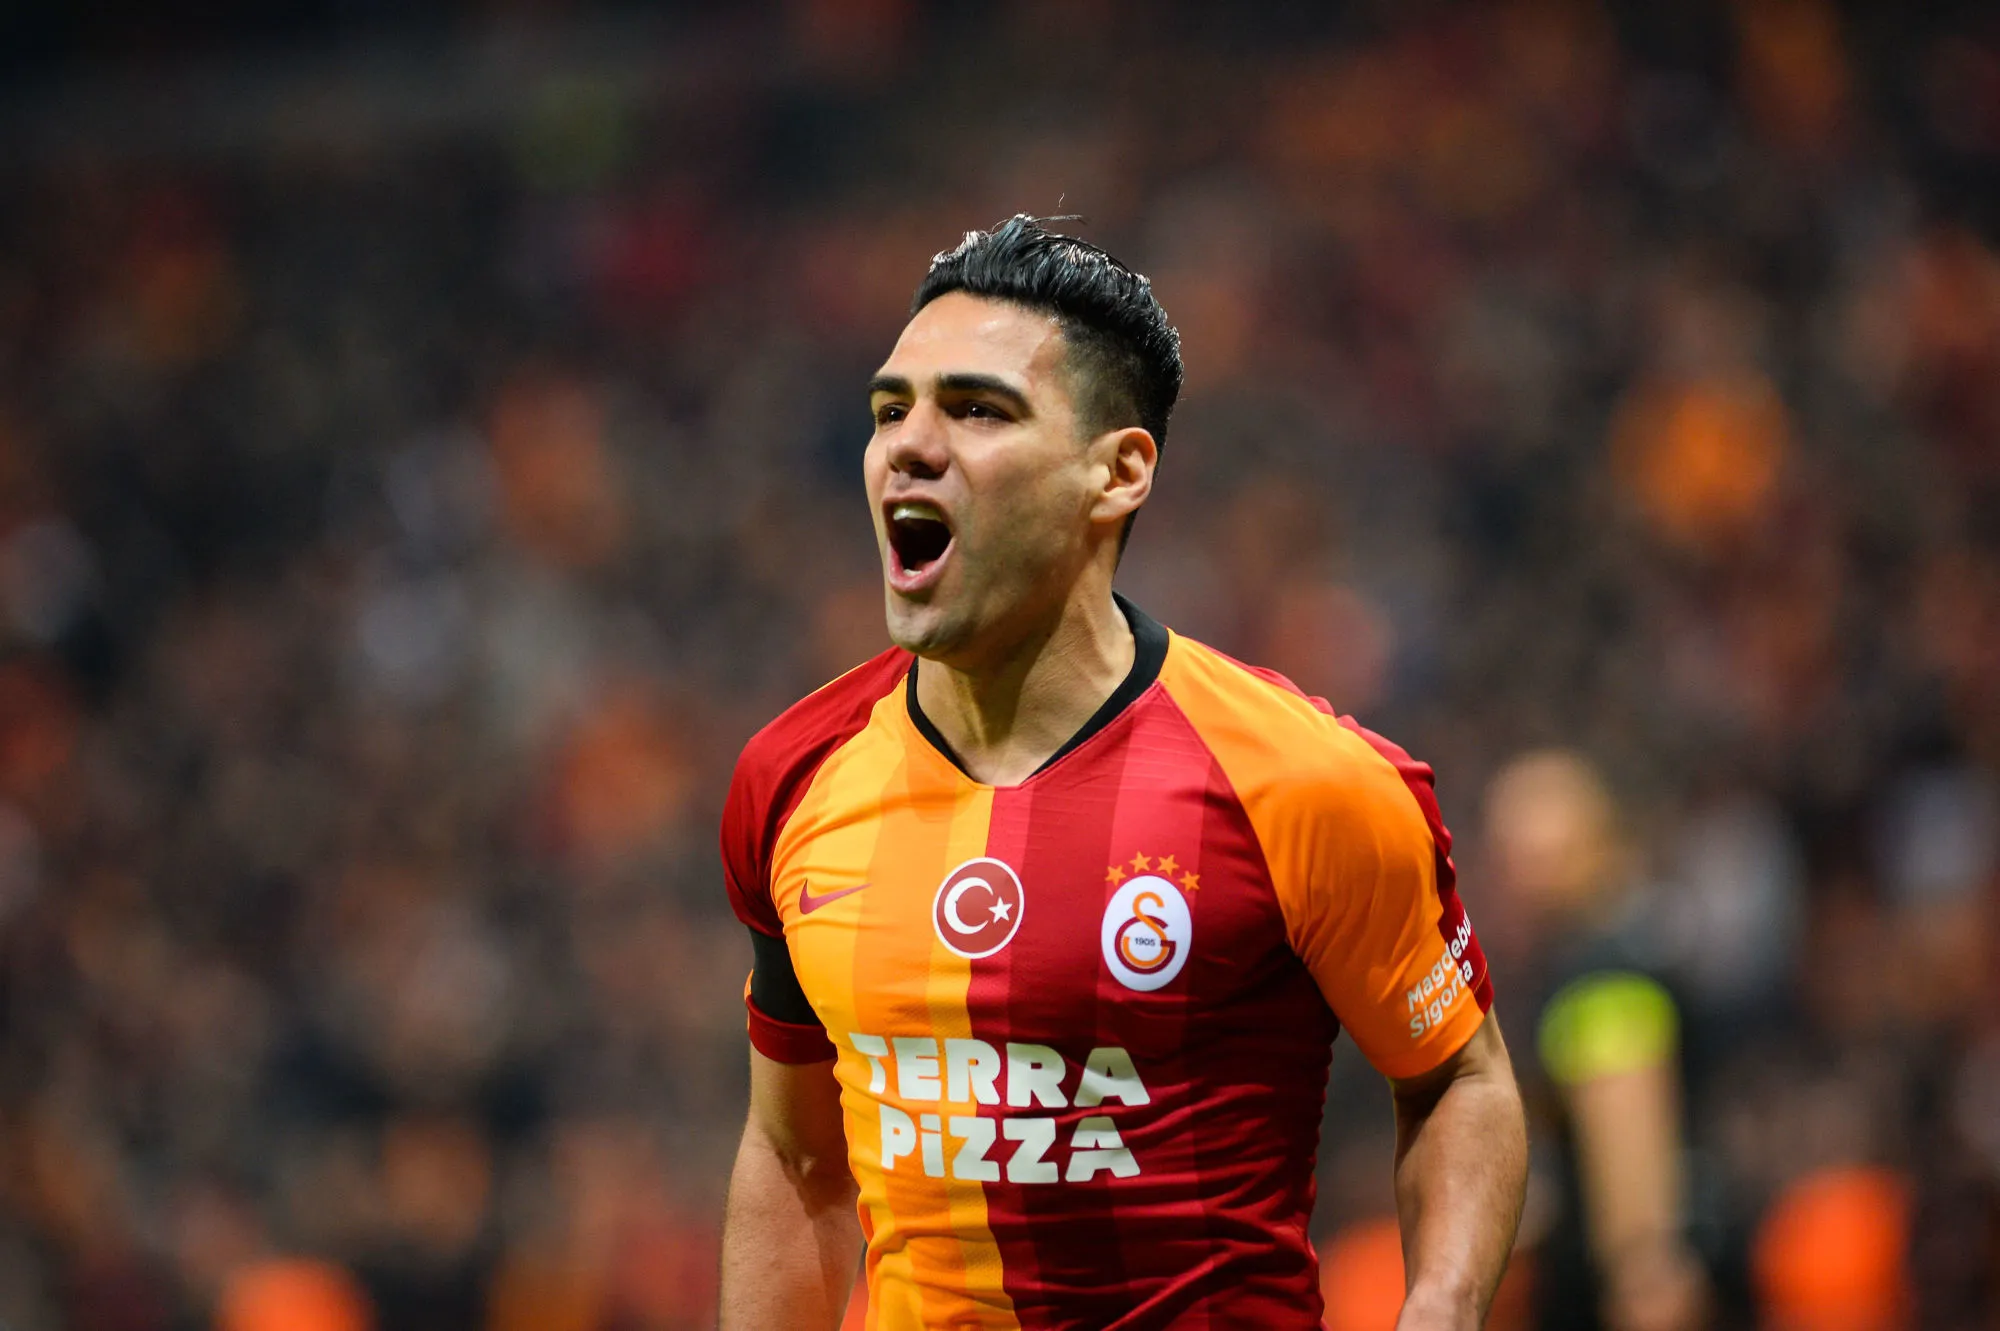 Pronostic Galatasaray Goztepe : Analyse, prono et cotes du match de Super Lig turque